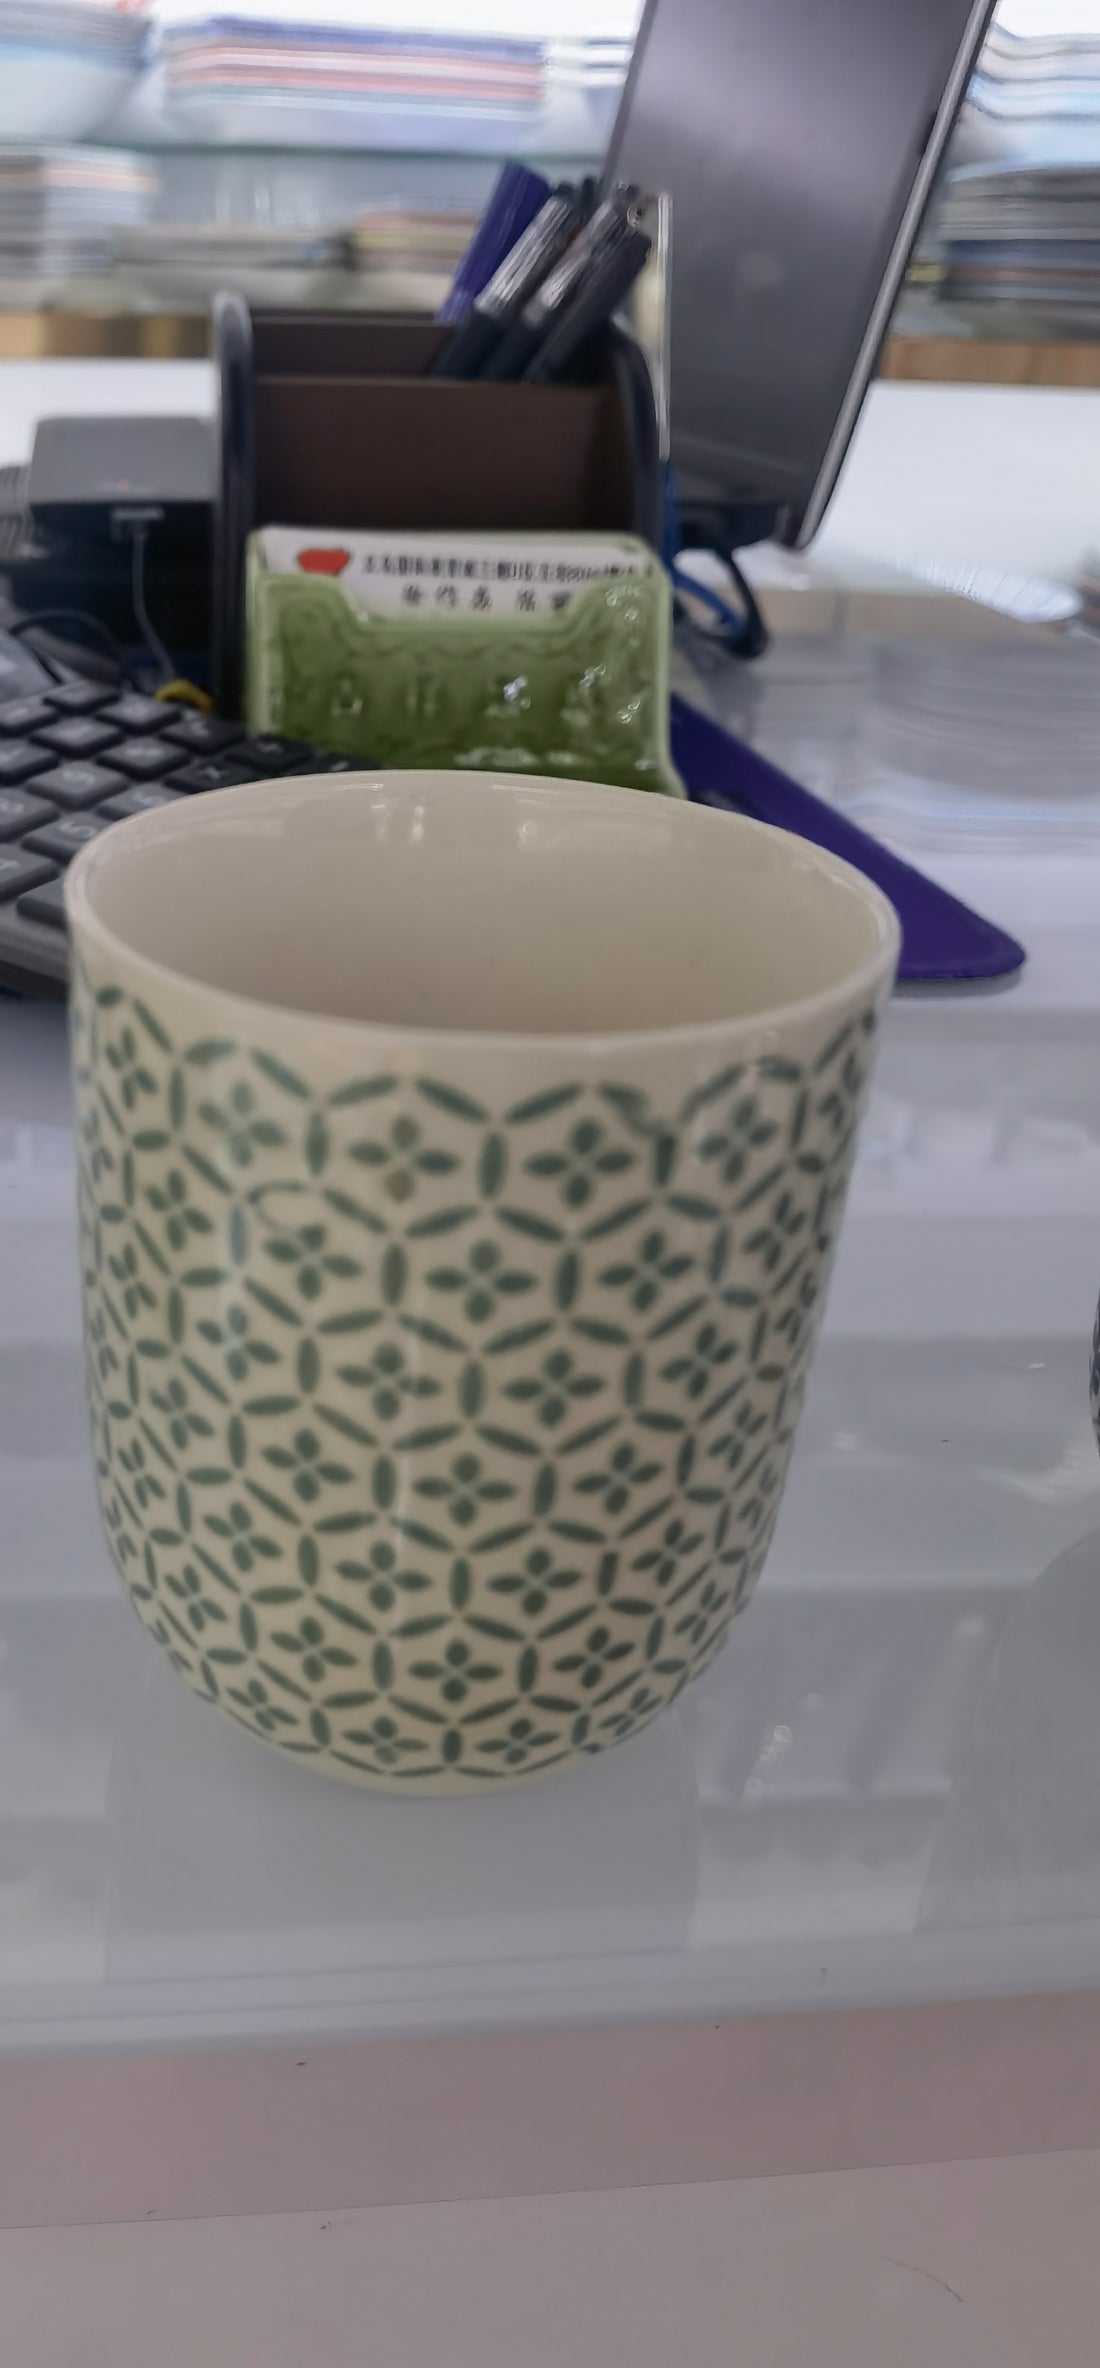 Herbal Tea Cups - Green Mosiac